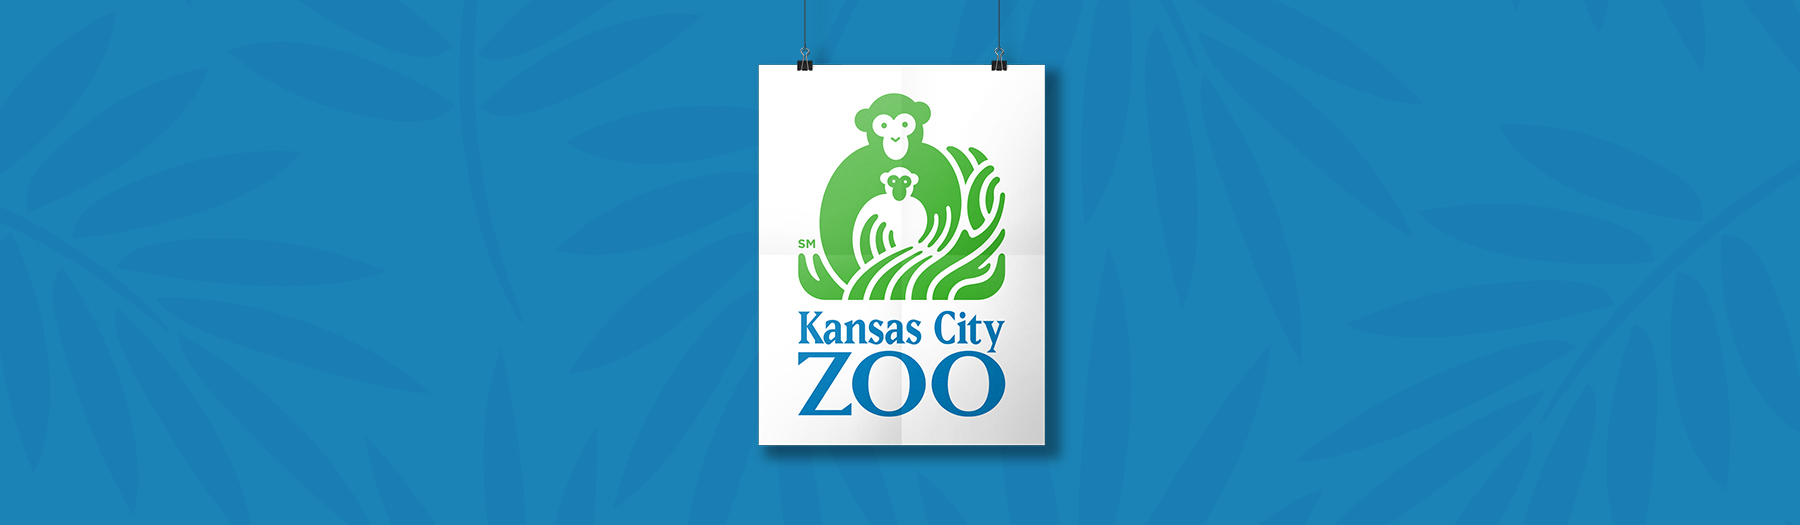 Web Design For The Kansas City Zoo